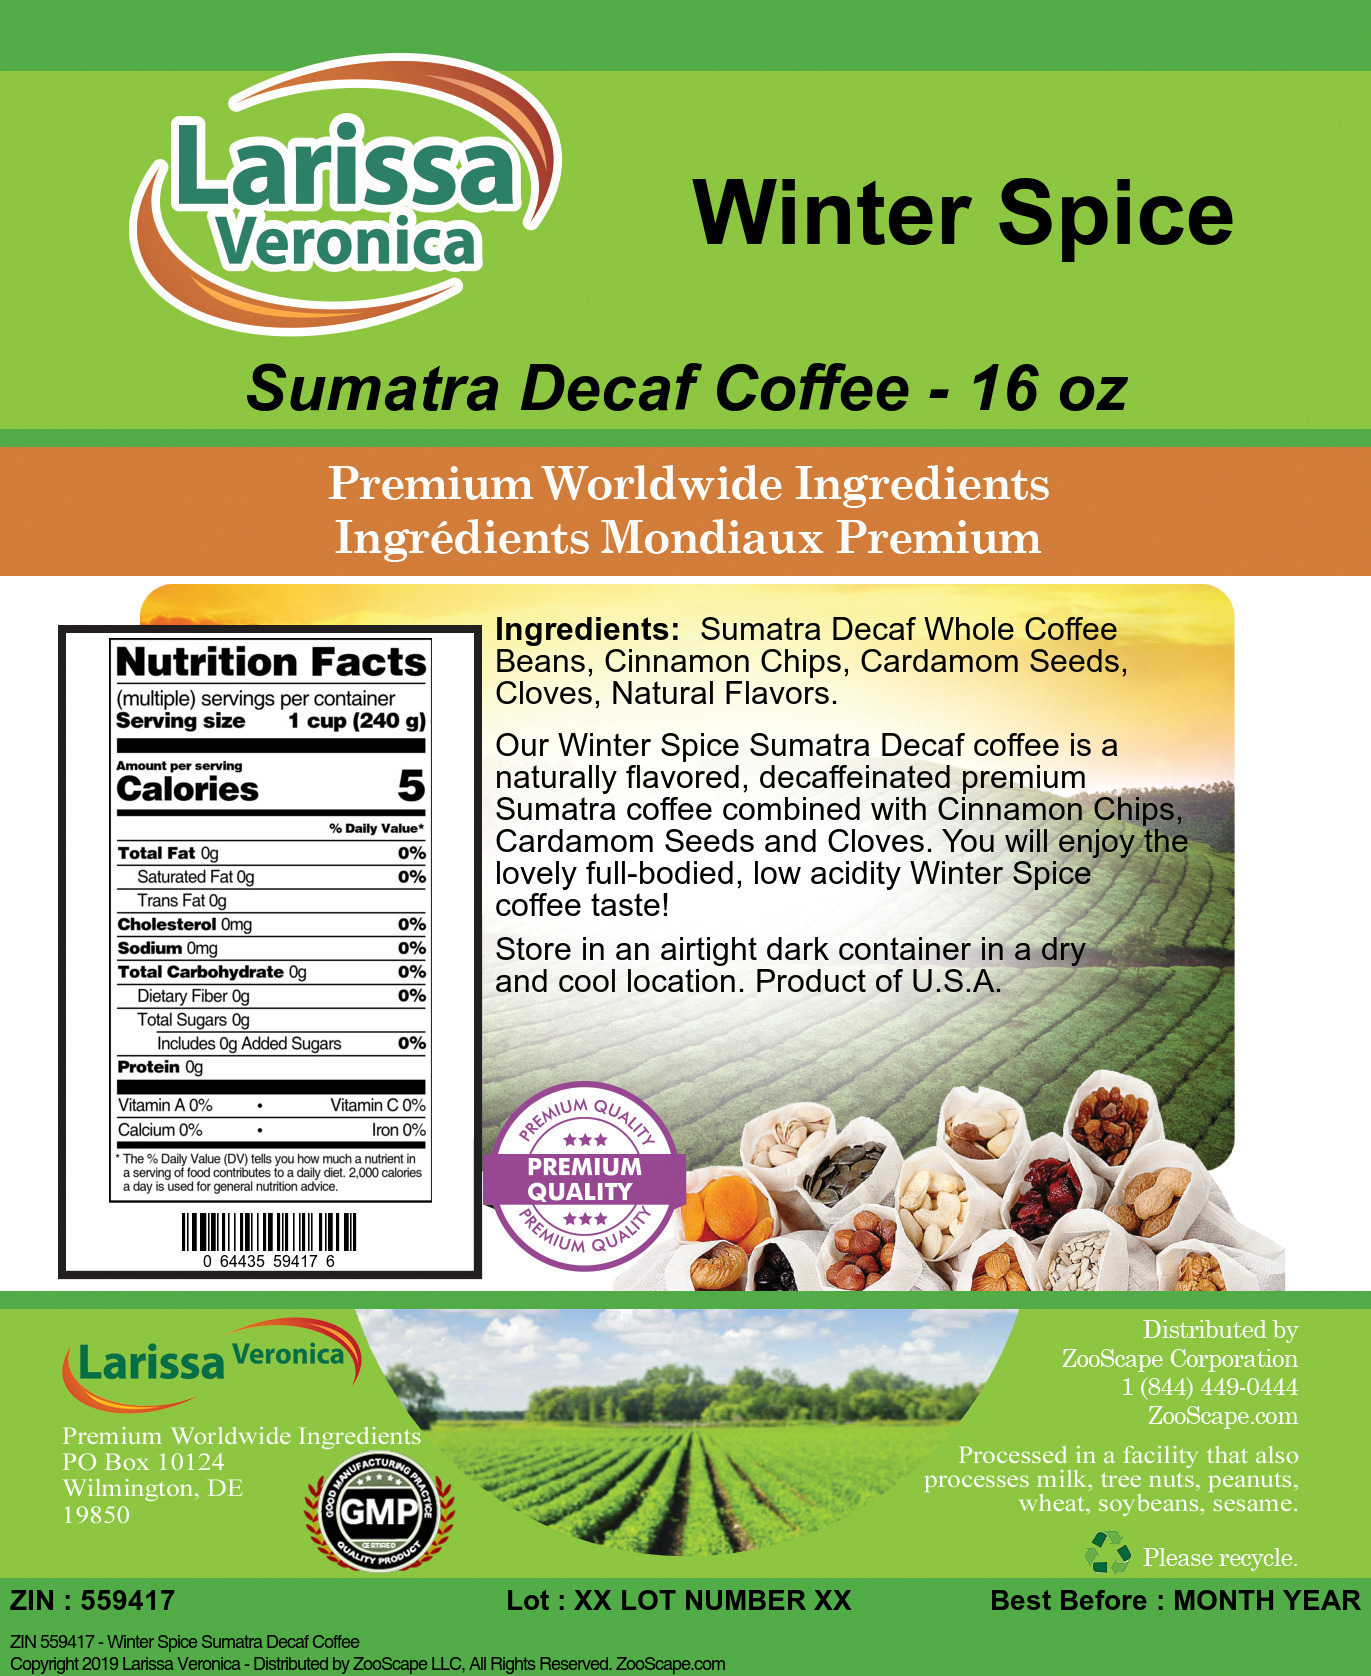 Winter Spice Sumatra Decaf Coffee - Label